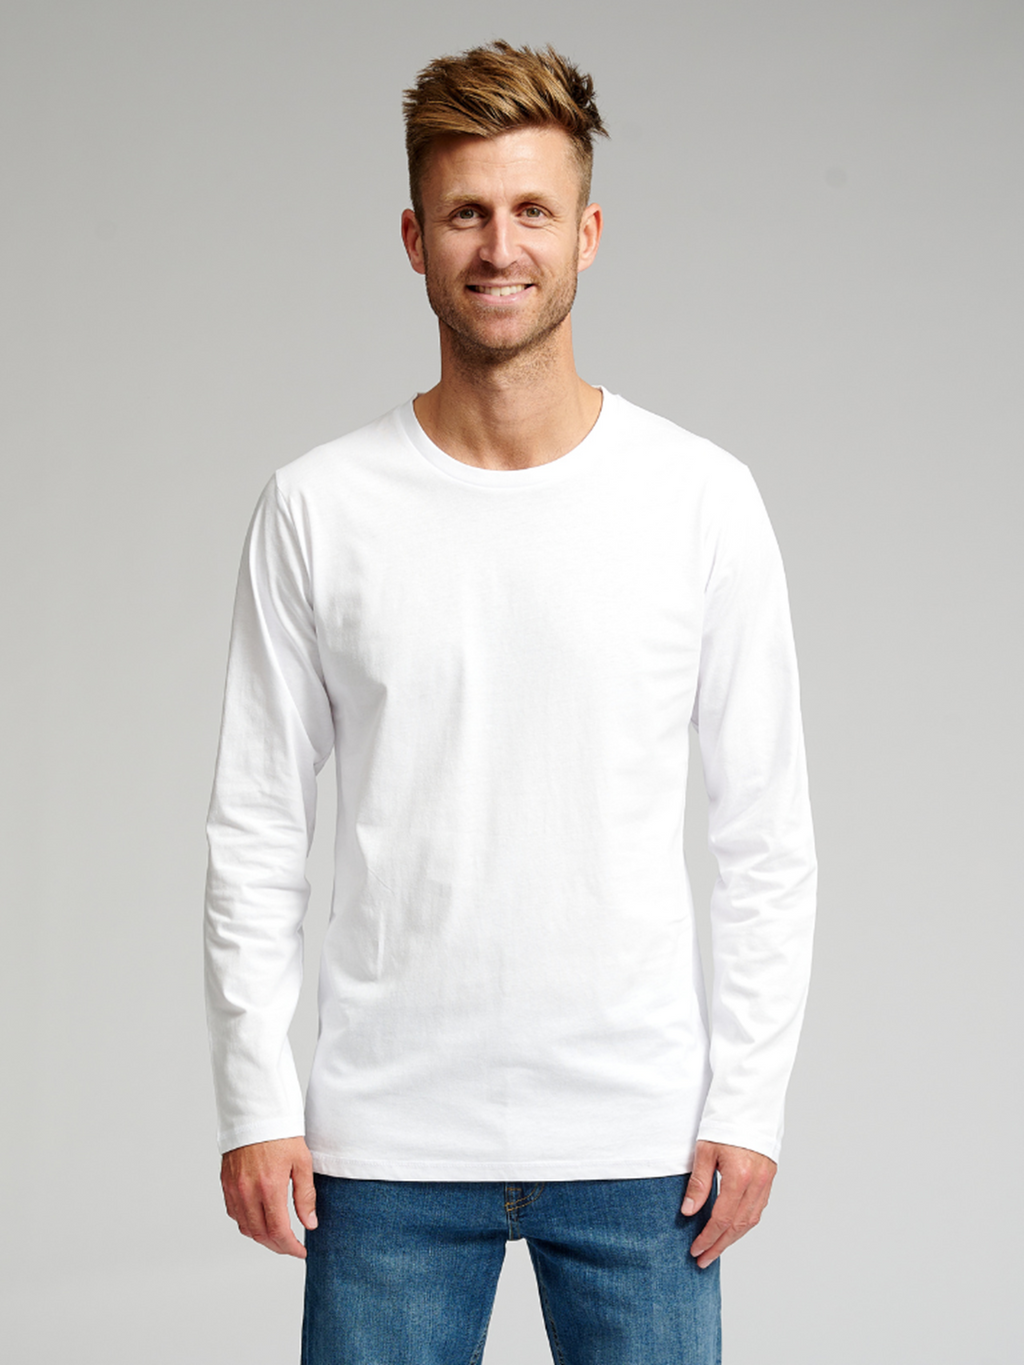 Basic Langærmet T-shirt - Hvid